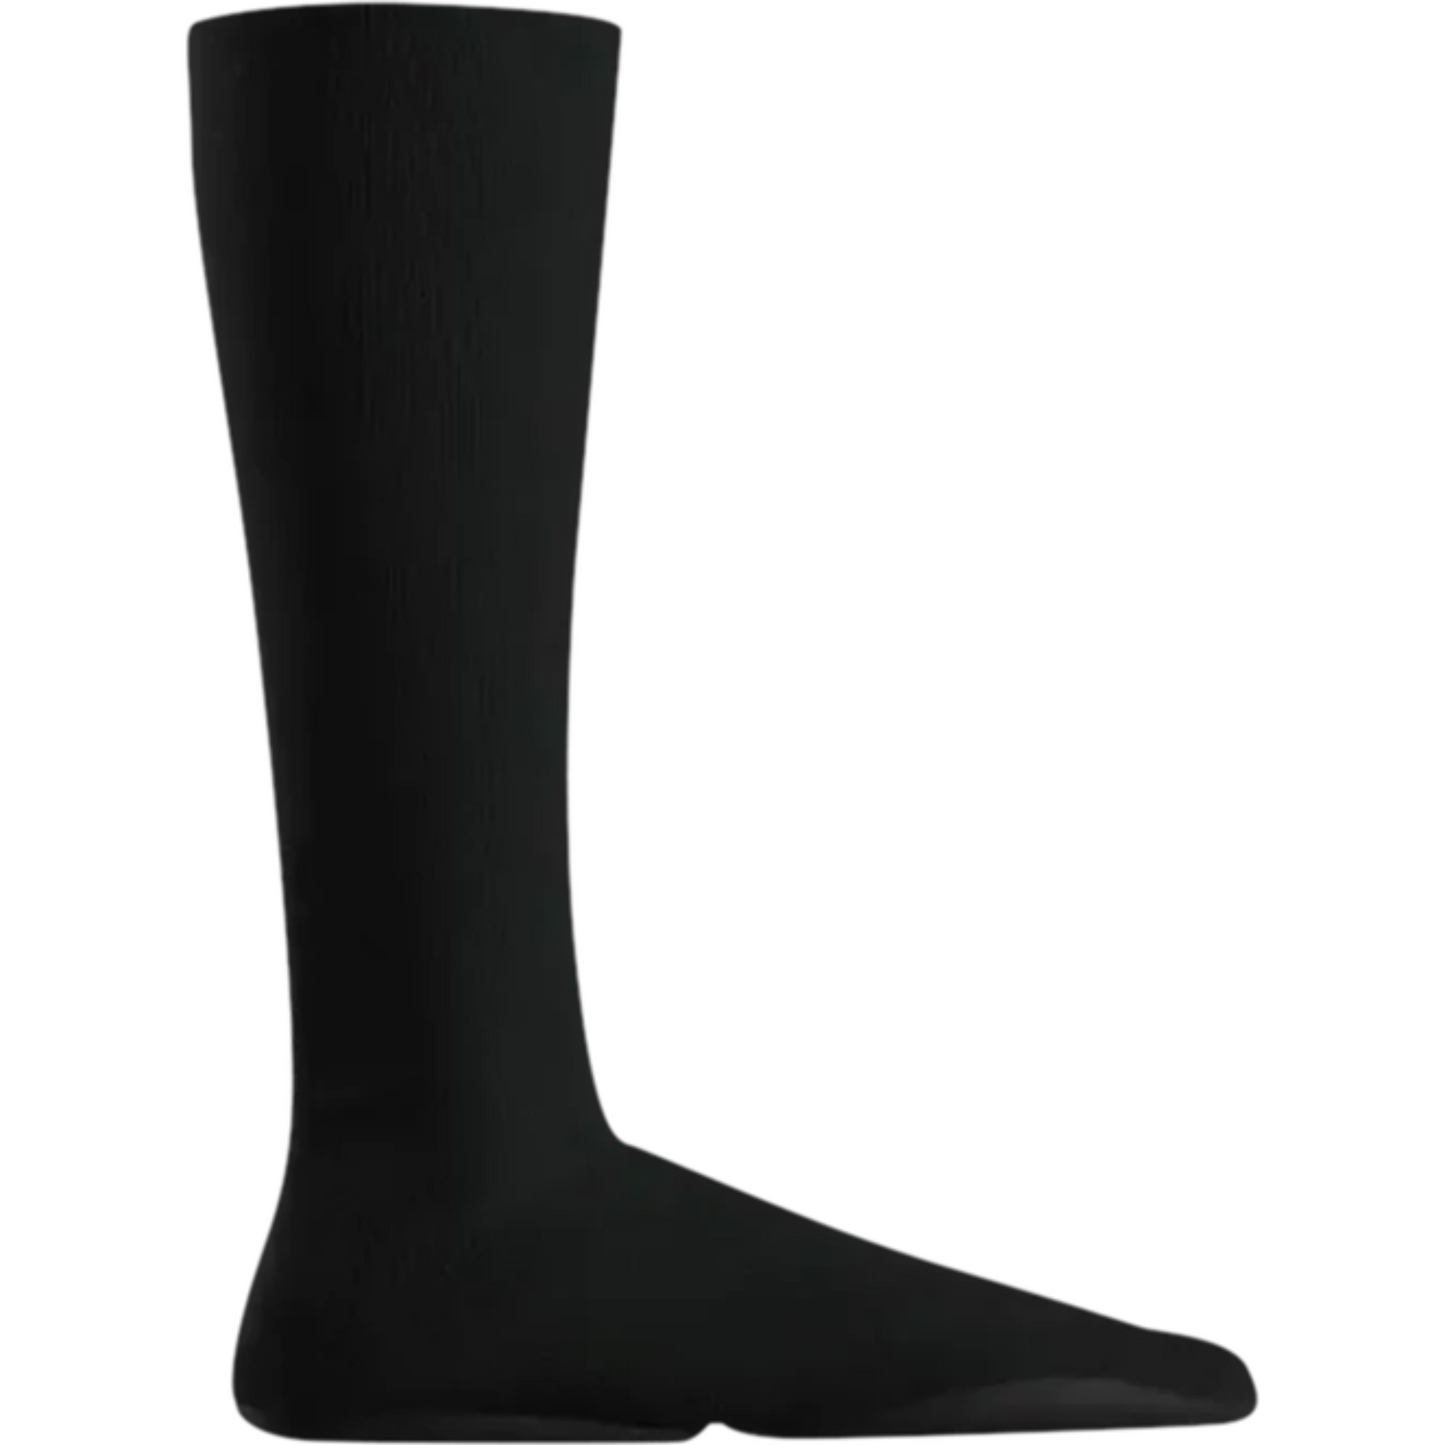 A single black knee-high sock against a plain white background.